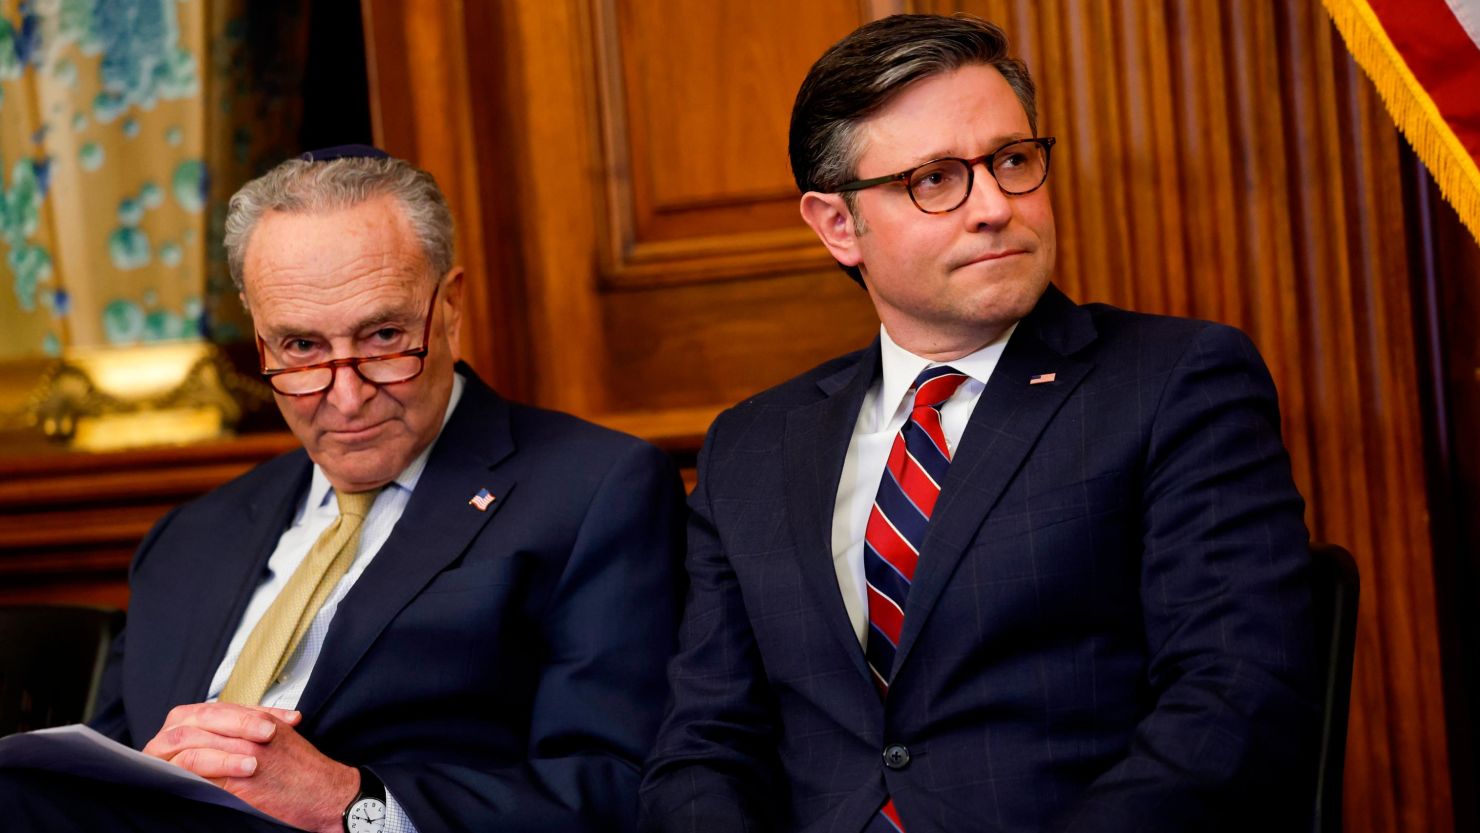 Washington : Congress Working to Avoid a Government Shutdown